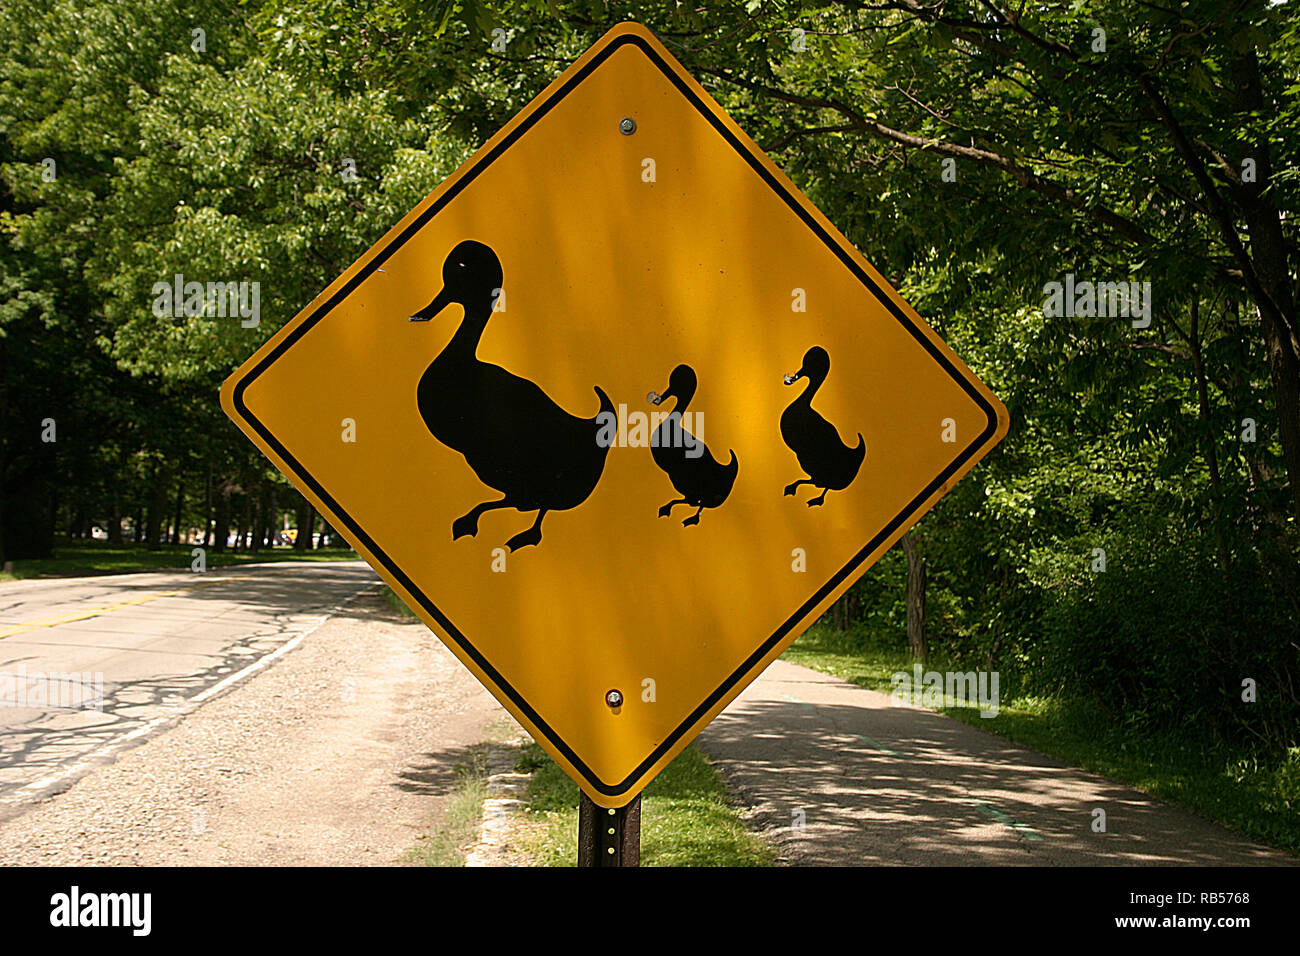 Ducks crossing road sign Stock Photo